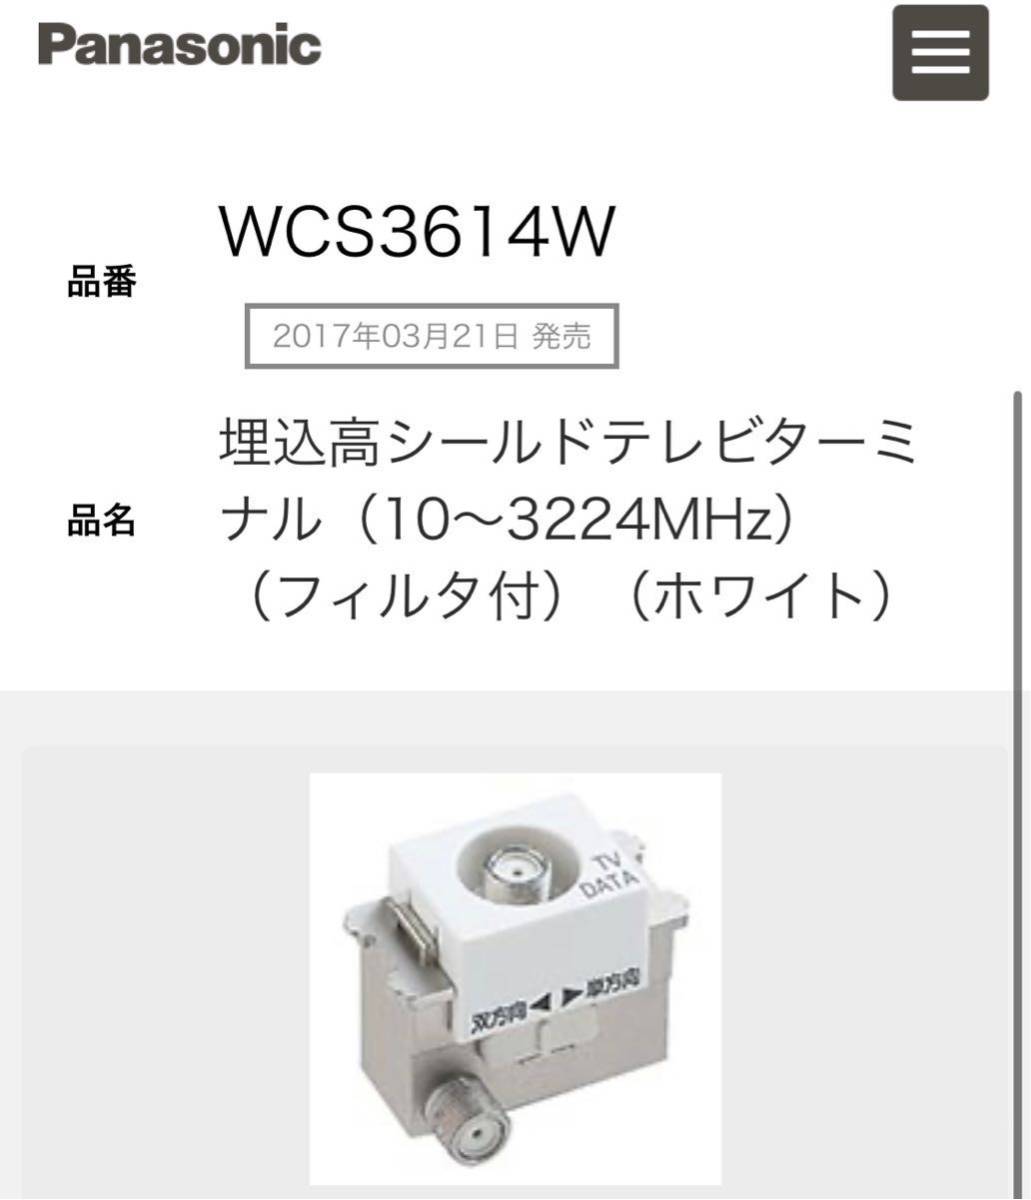 WCS3614W. включено высота защита телевизор терминал Panasonic Panasonic